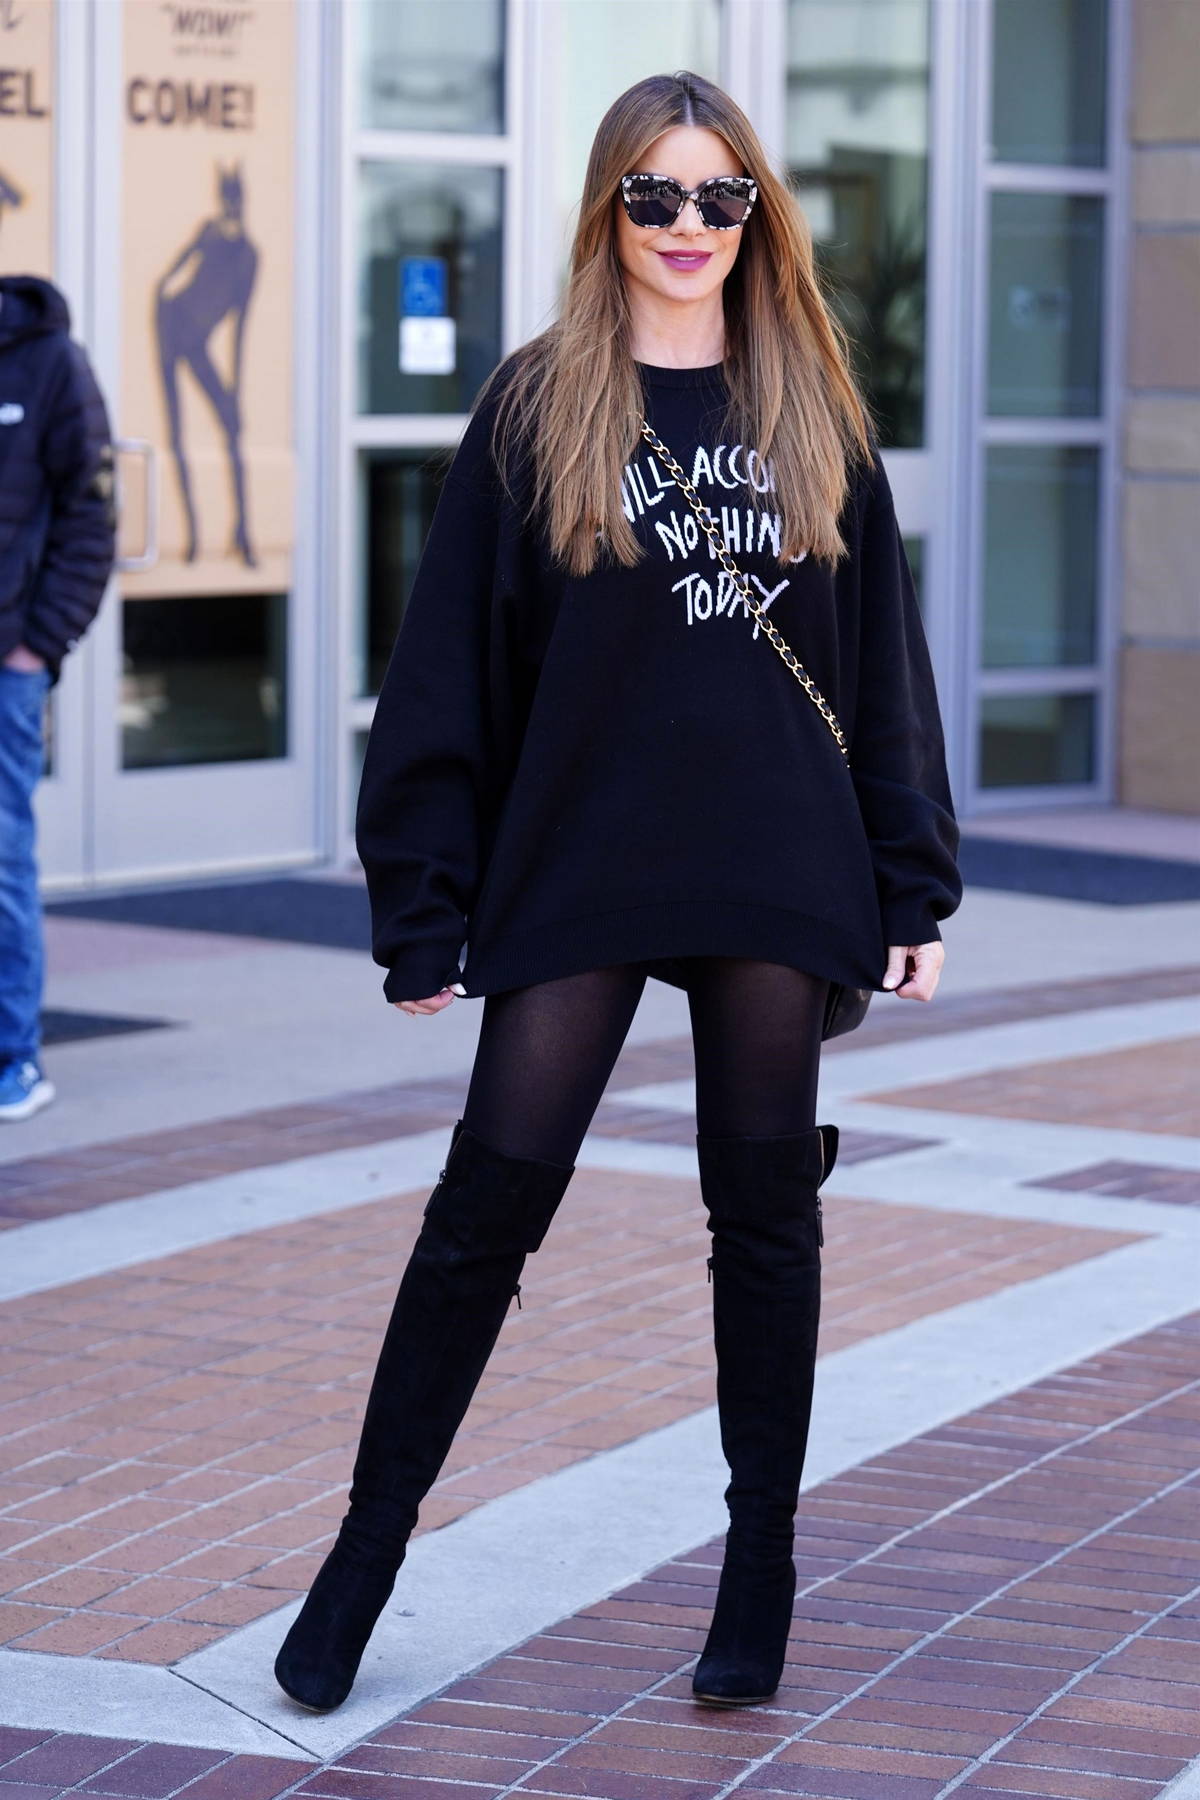 Sofia Vergara rocks an oversized black sweater with matching